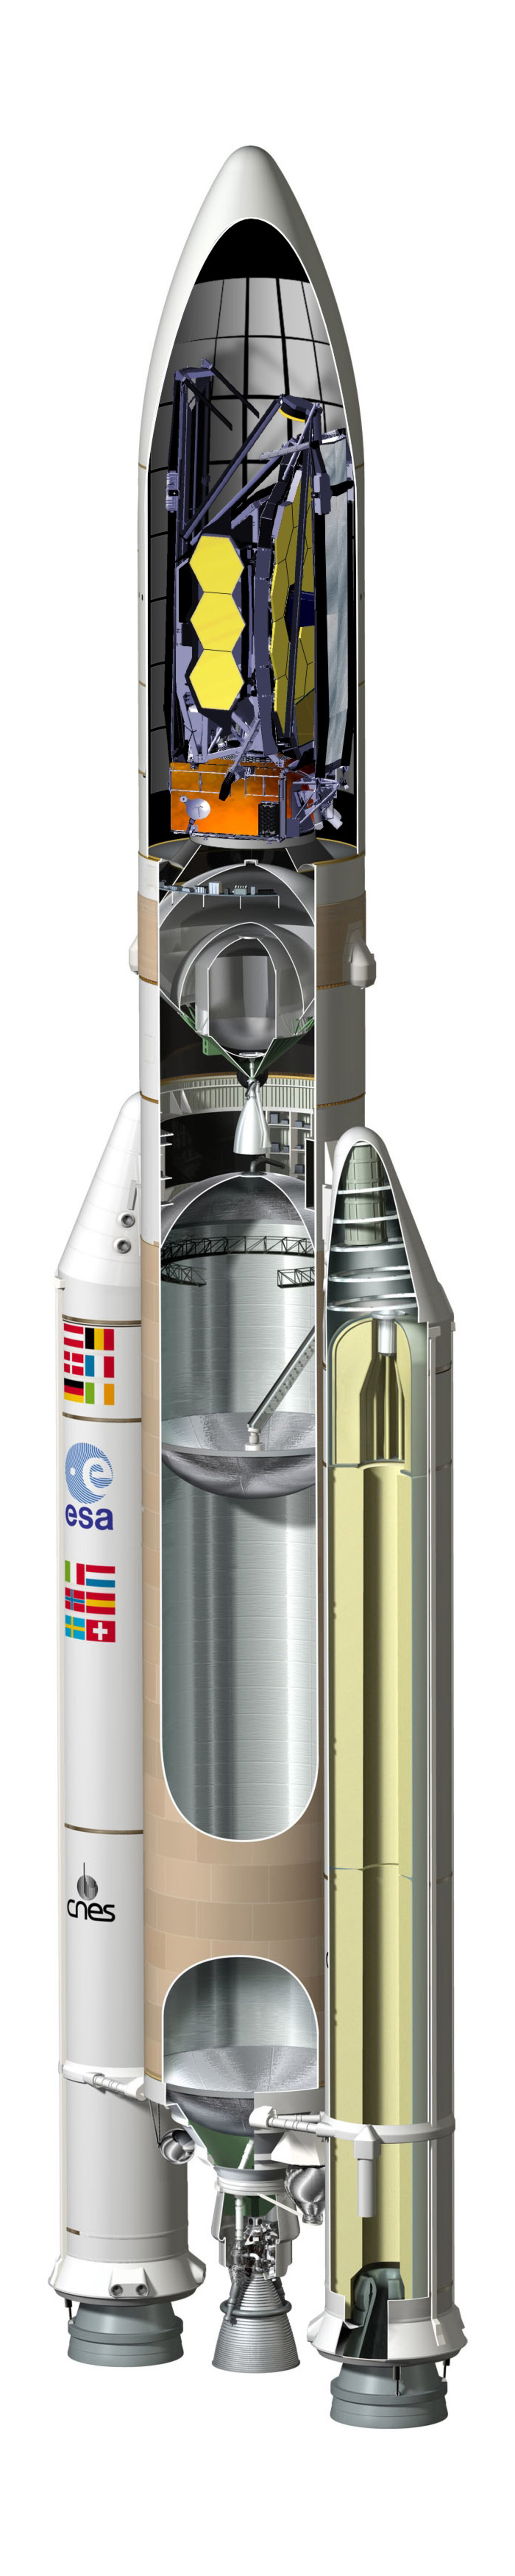 JWST stowed inside the Ariane 5